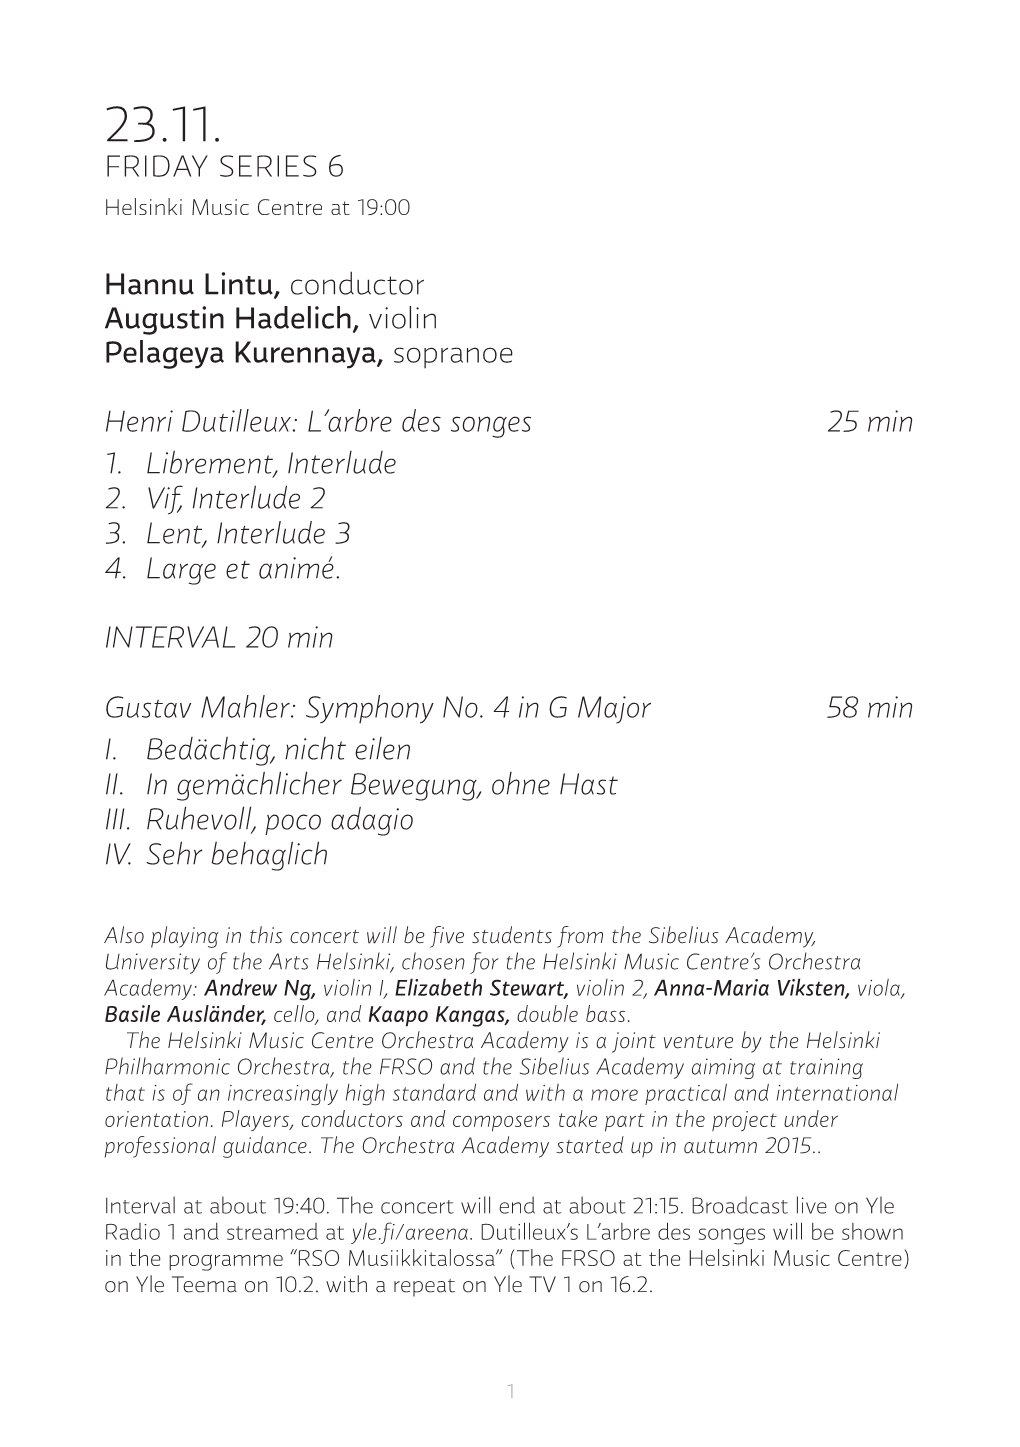 FRIDAY SERIES 6 Hannu Lintu, Conductor Augustin Hadelich